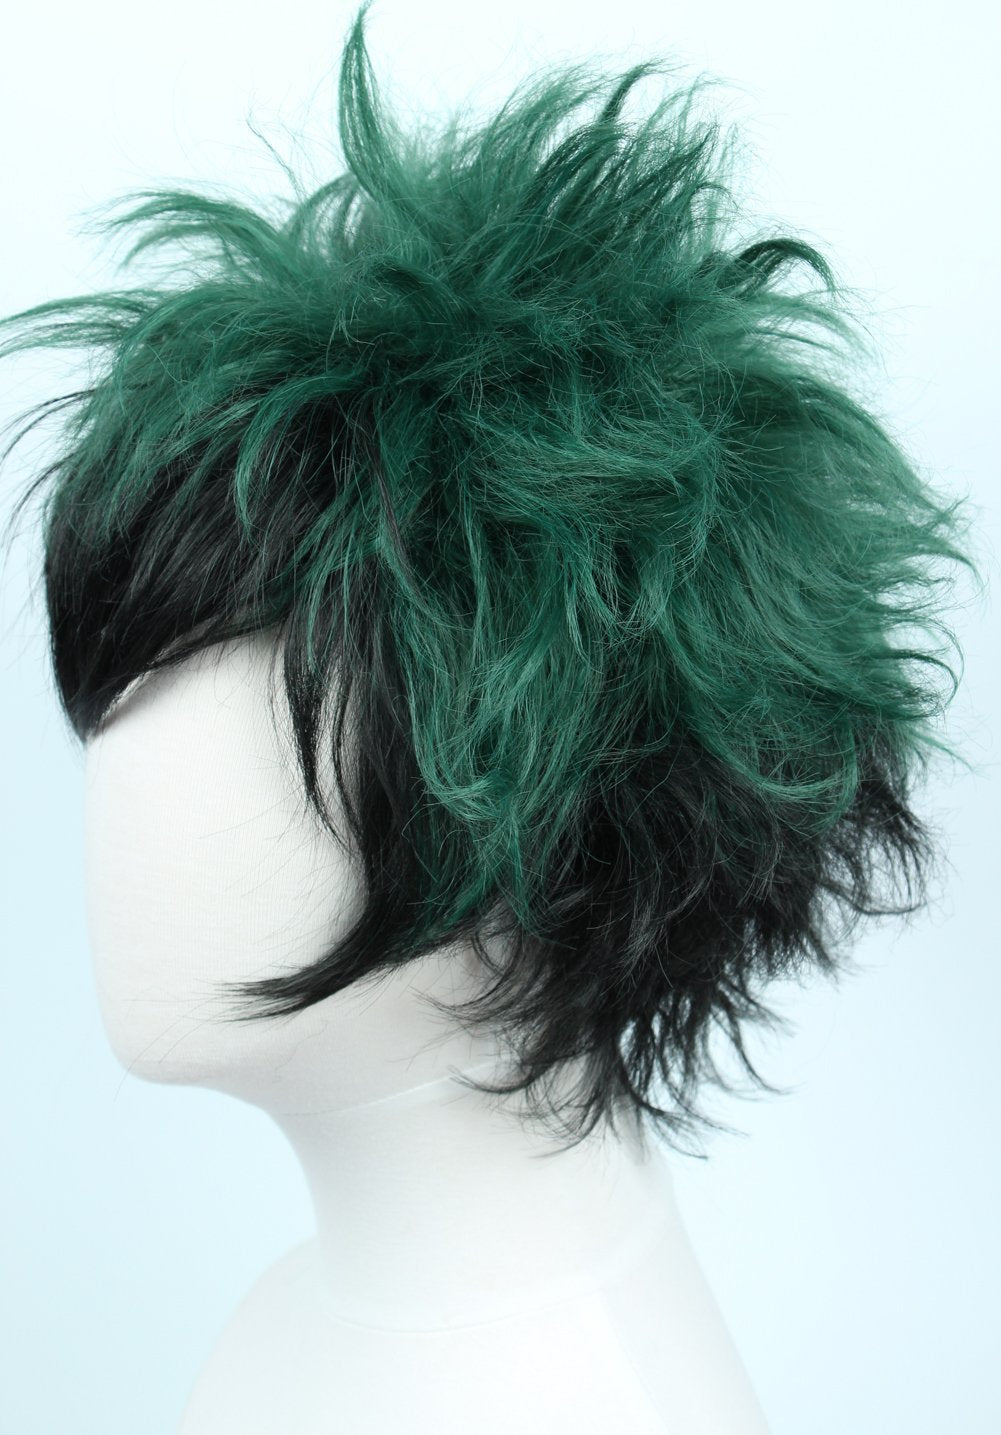 🎃Anime Cosplay Wig Short Black Green Halloween Costume Curly Wig MYLOCKME